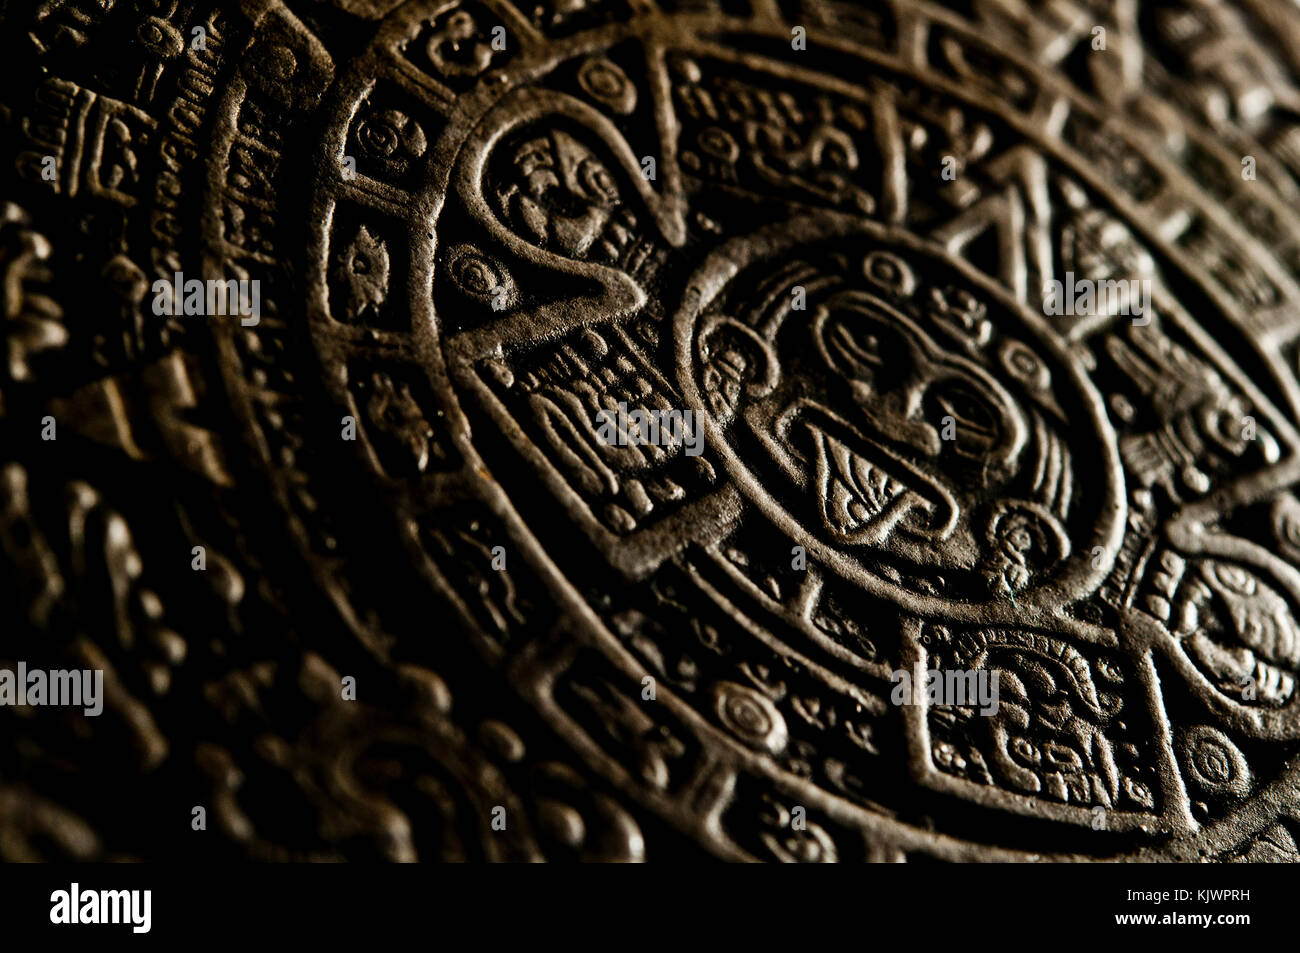 Aztec calendar stone detail Stock Photo